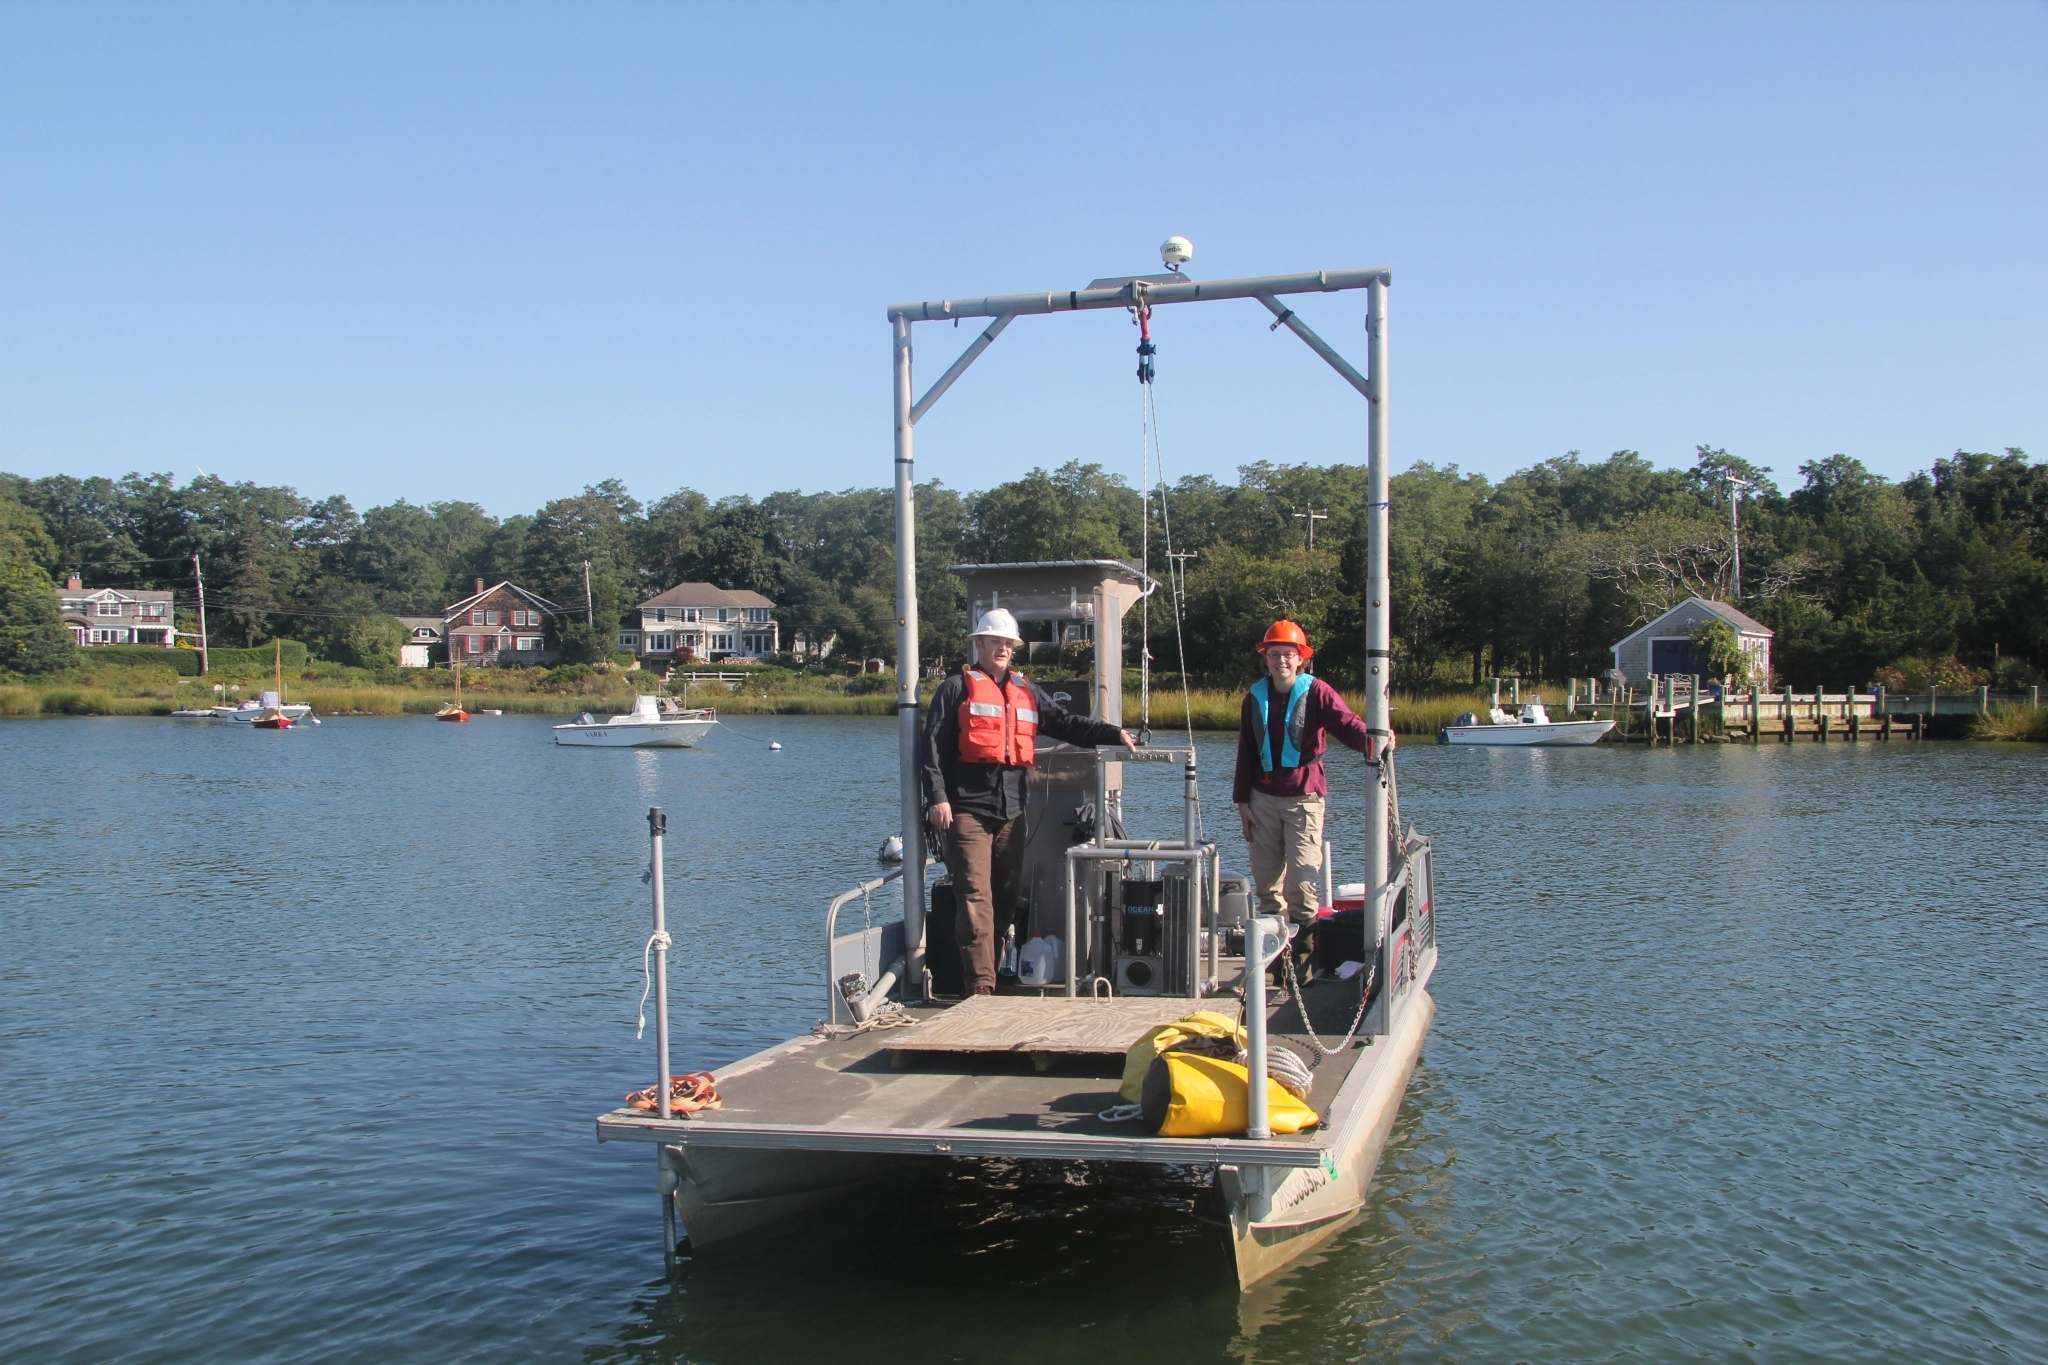 20-foot custom Pontoon Boat designed for shallow water vibracoring and sediment sampling